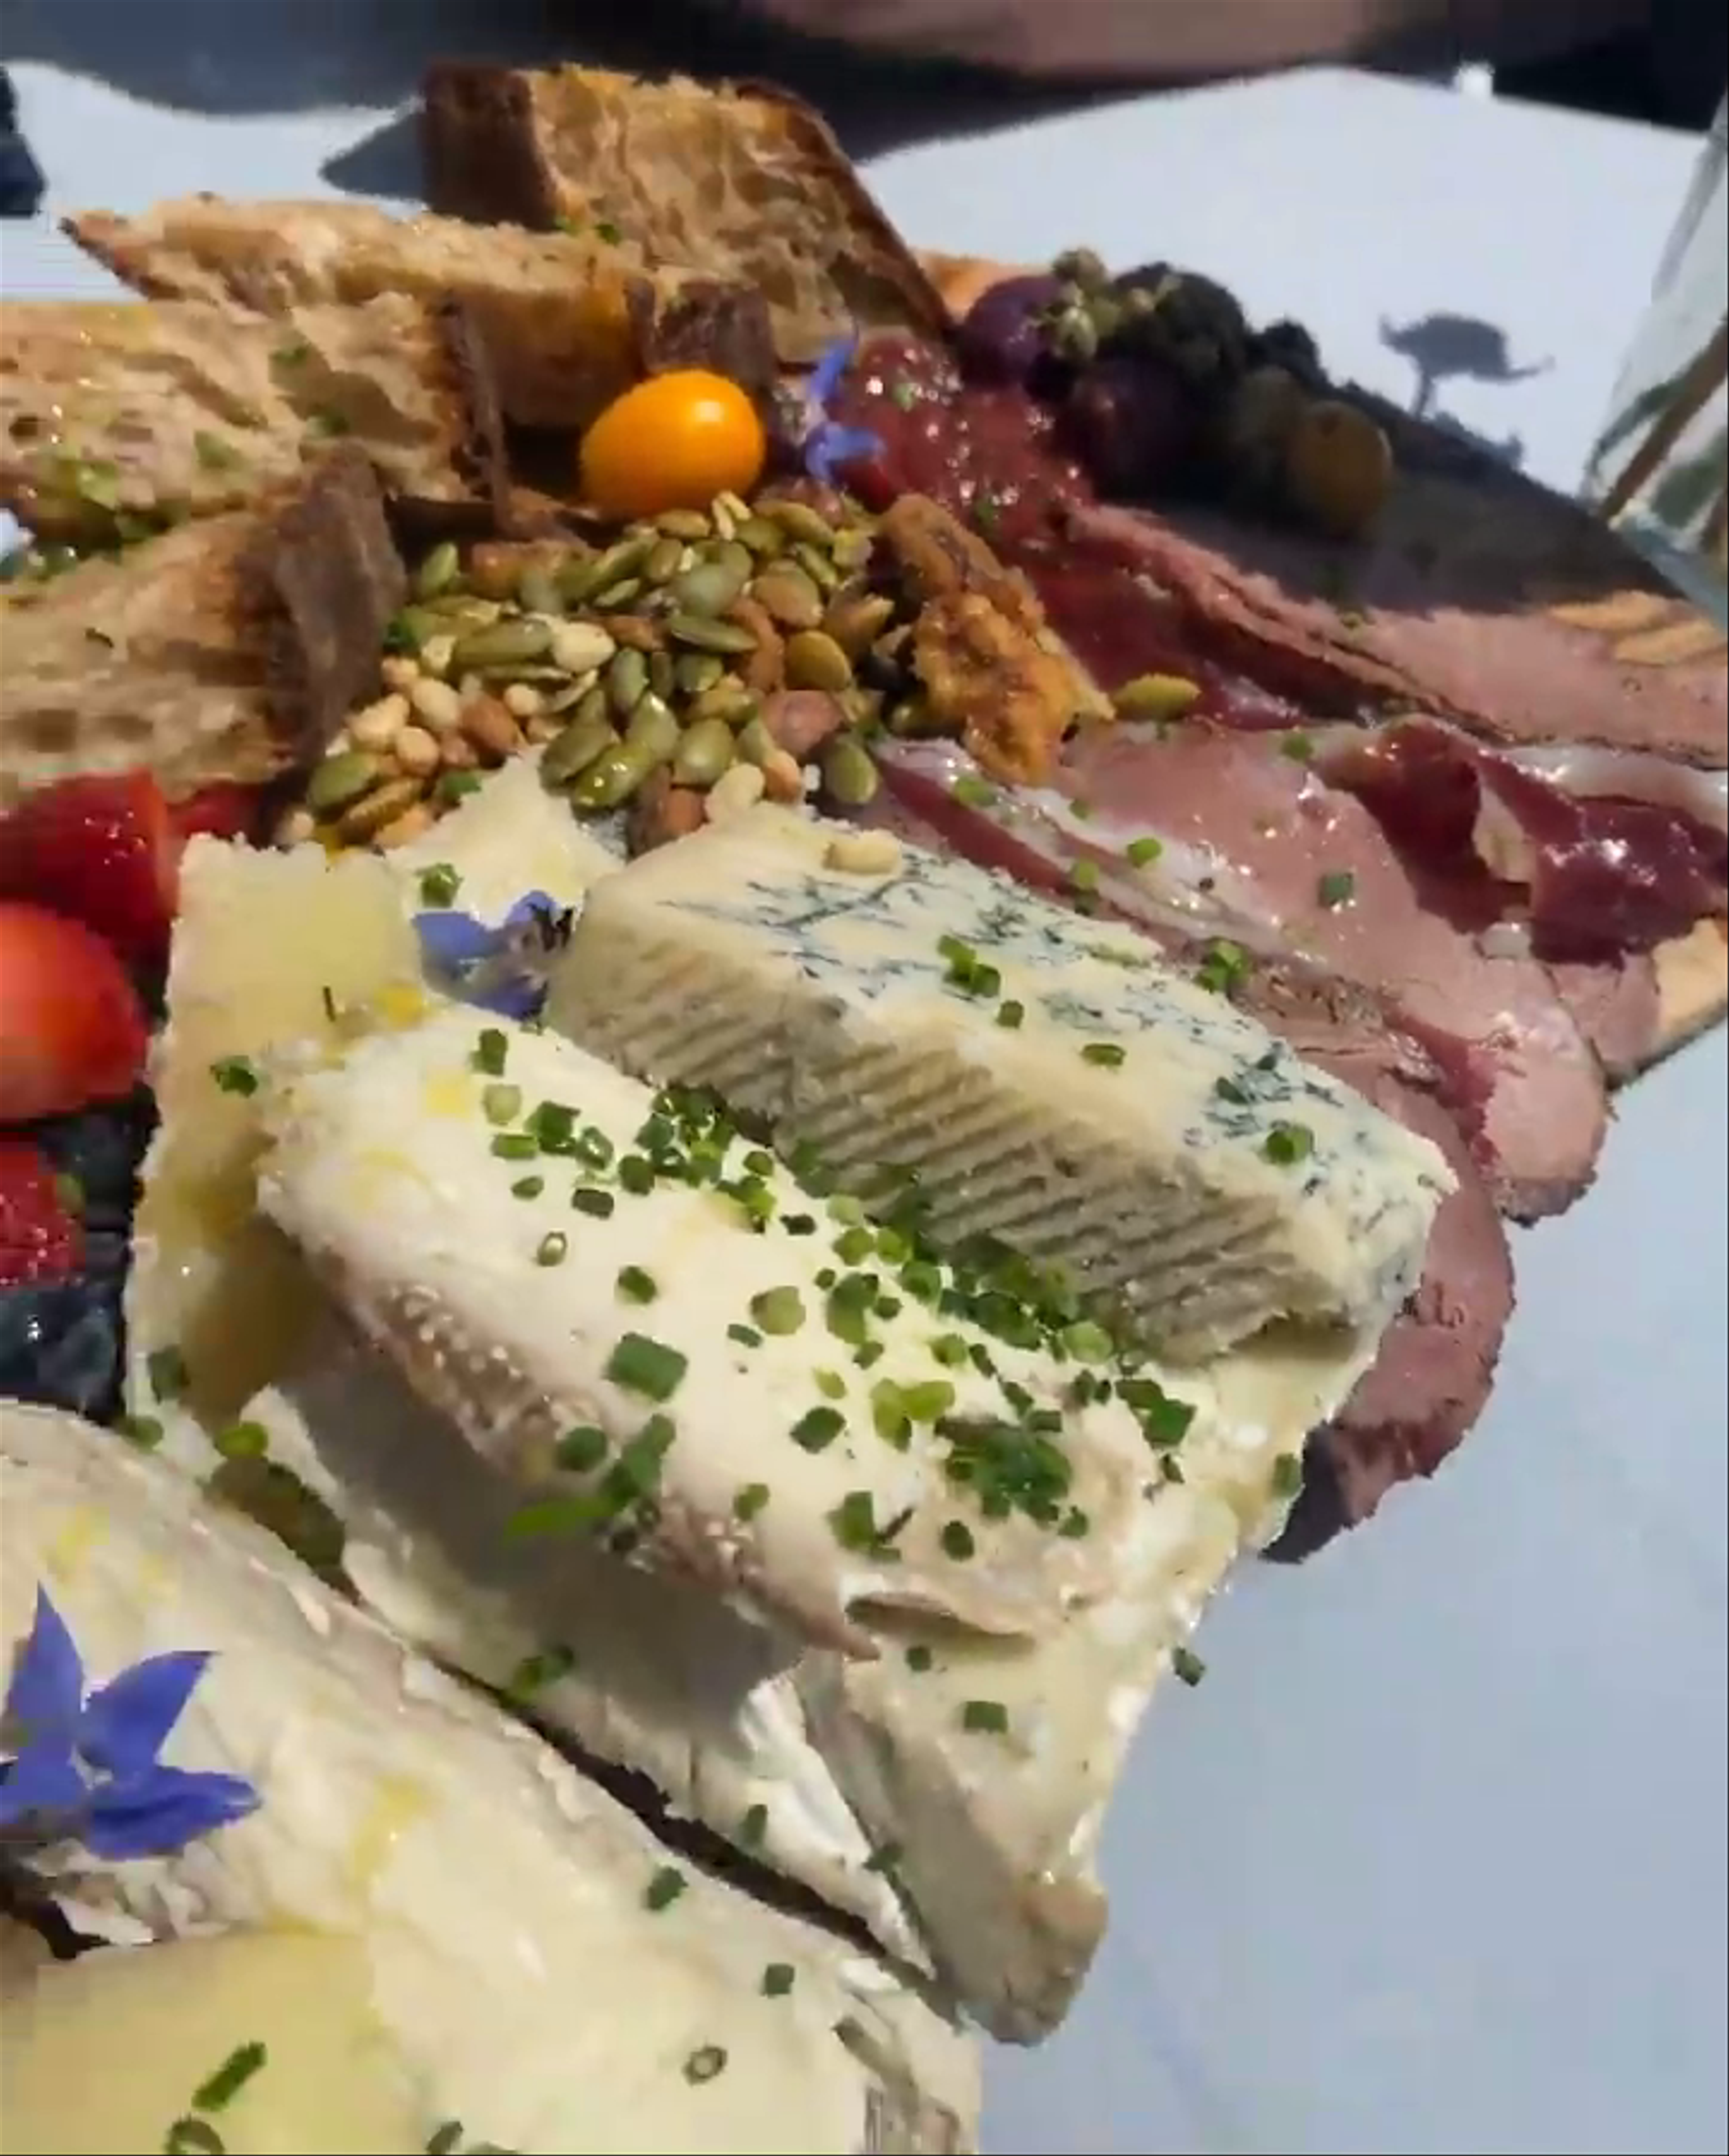 Farmers Charcuterie Board dish at Papille Gustative in Santa Monica